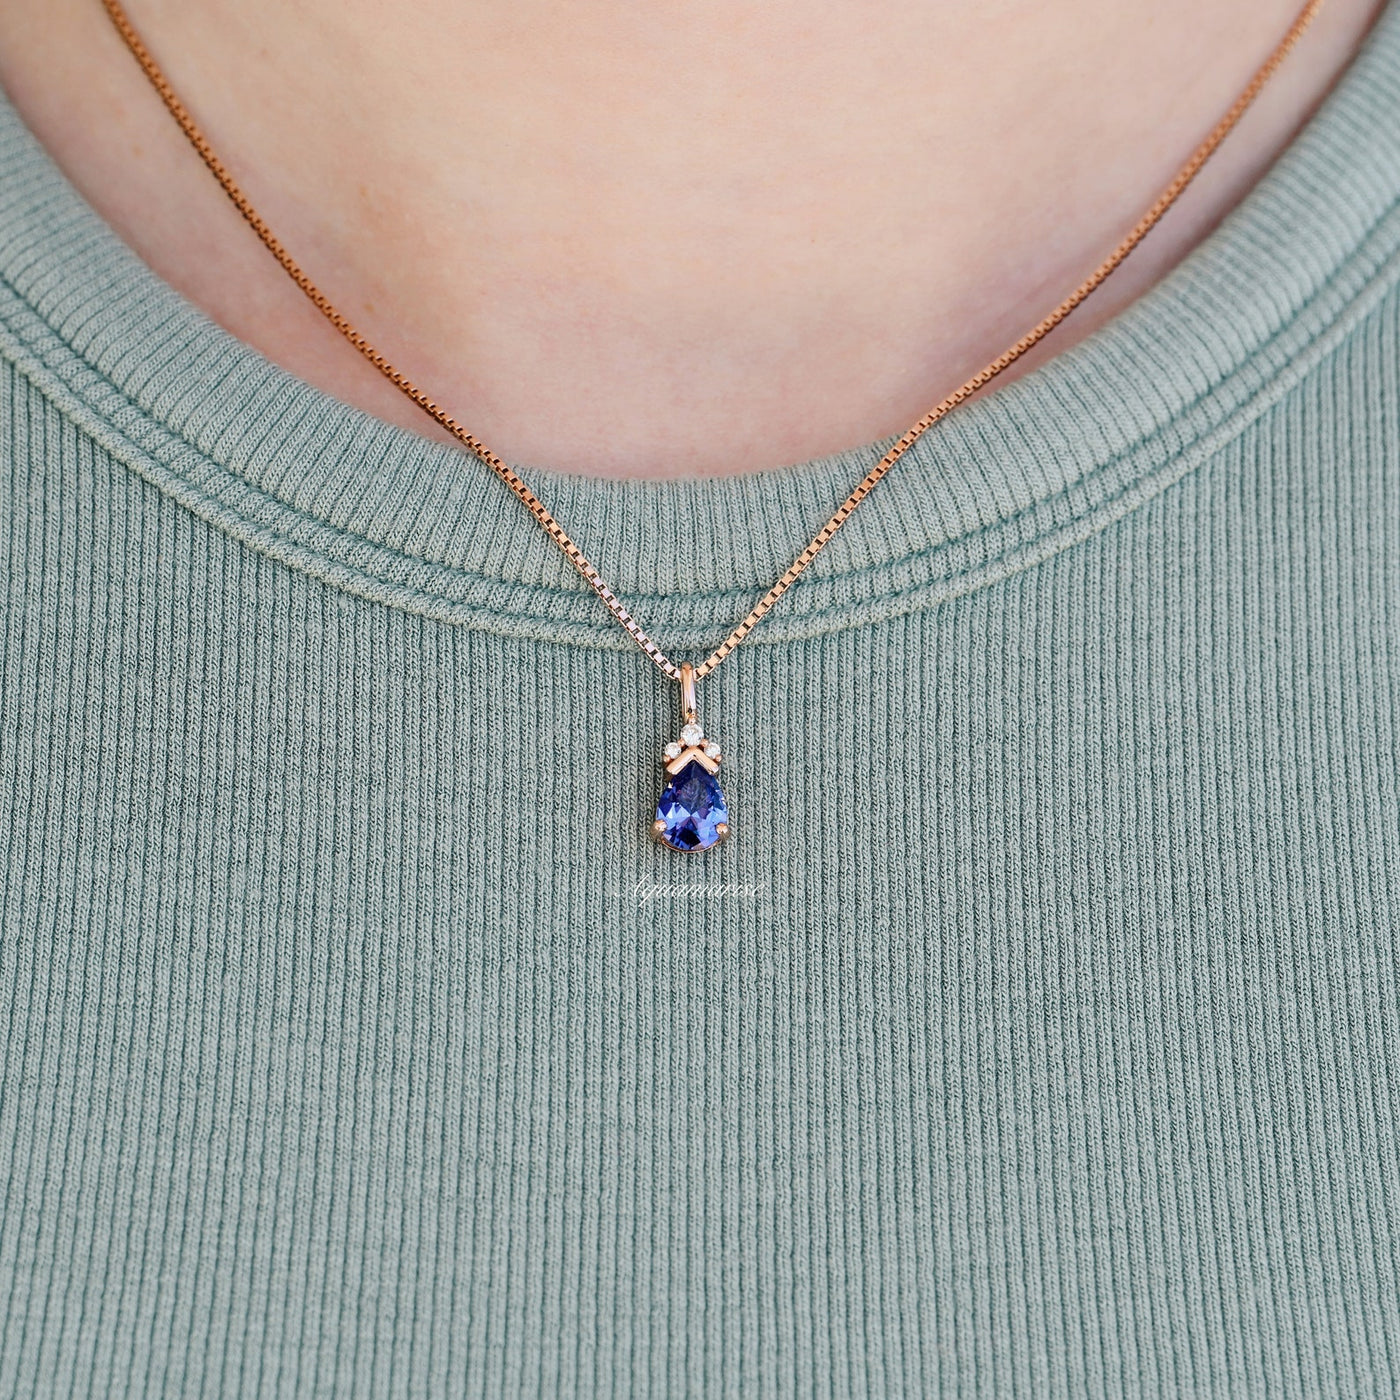 Minimalist Teardrop Tanzanite Necklace For Women- 14K Rose Gold Vermeil Dainty December Birthstone Gift Necklace- Anniversary Gift For Her